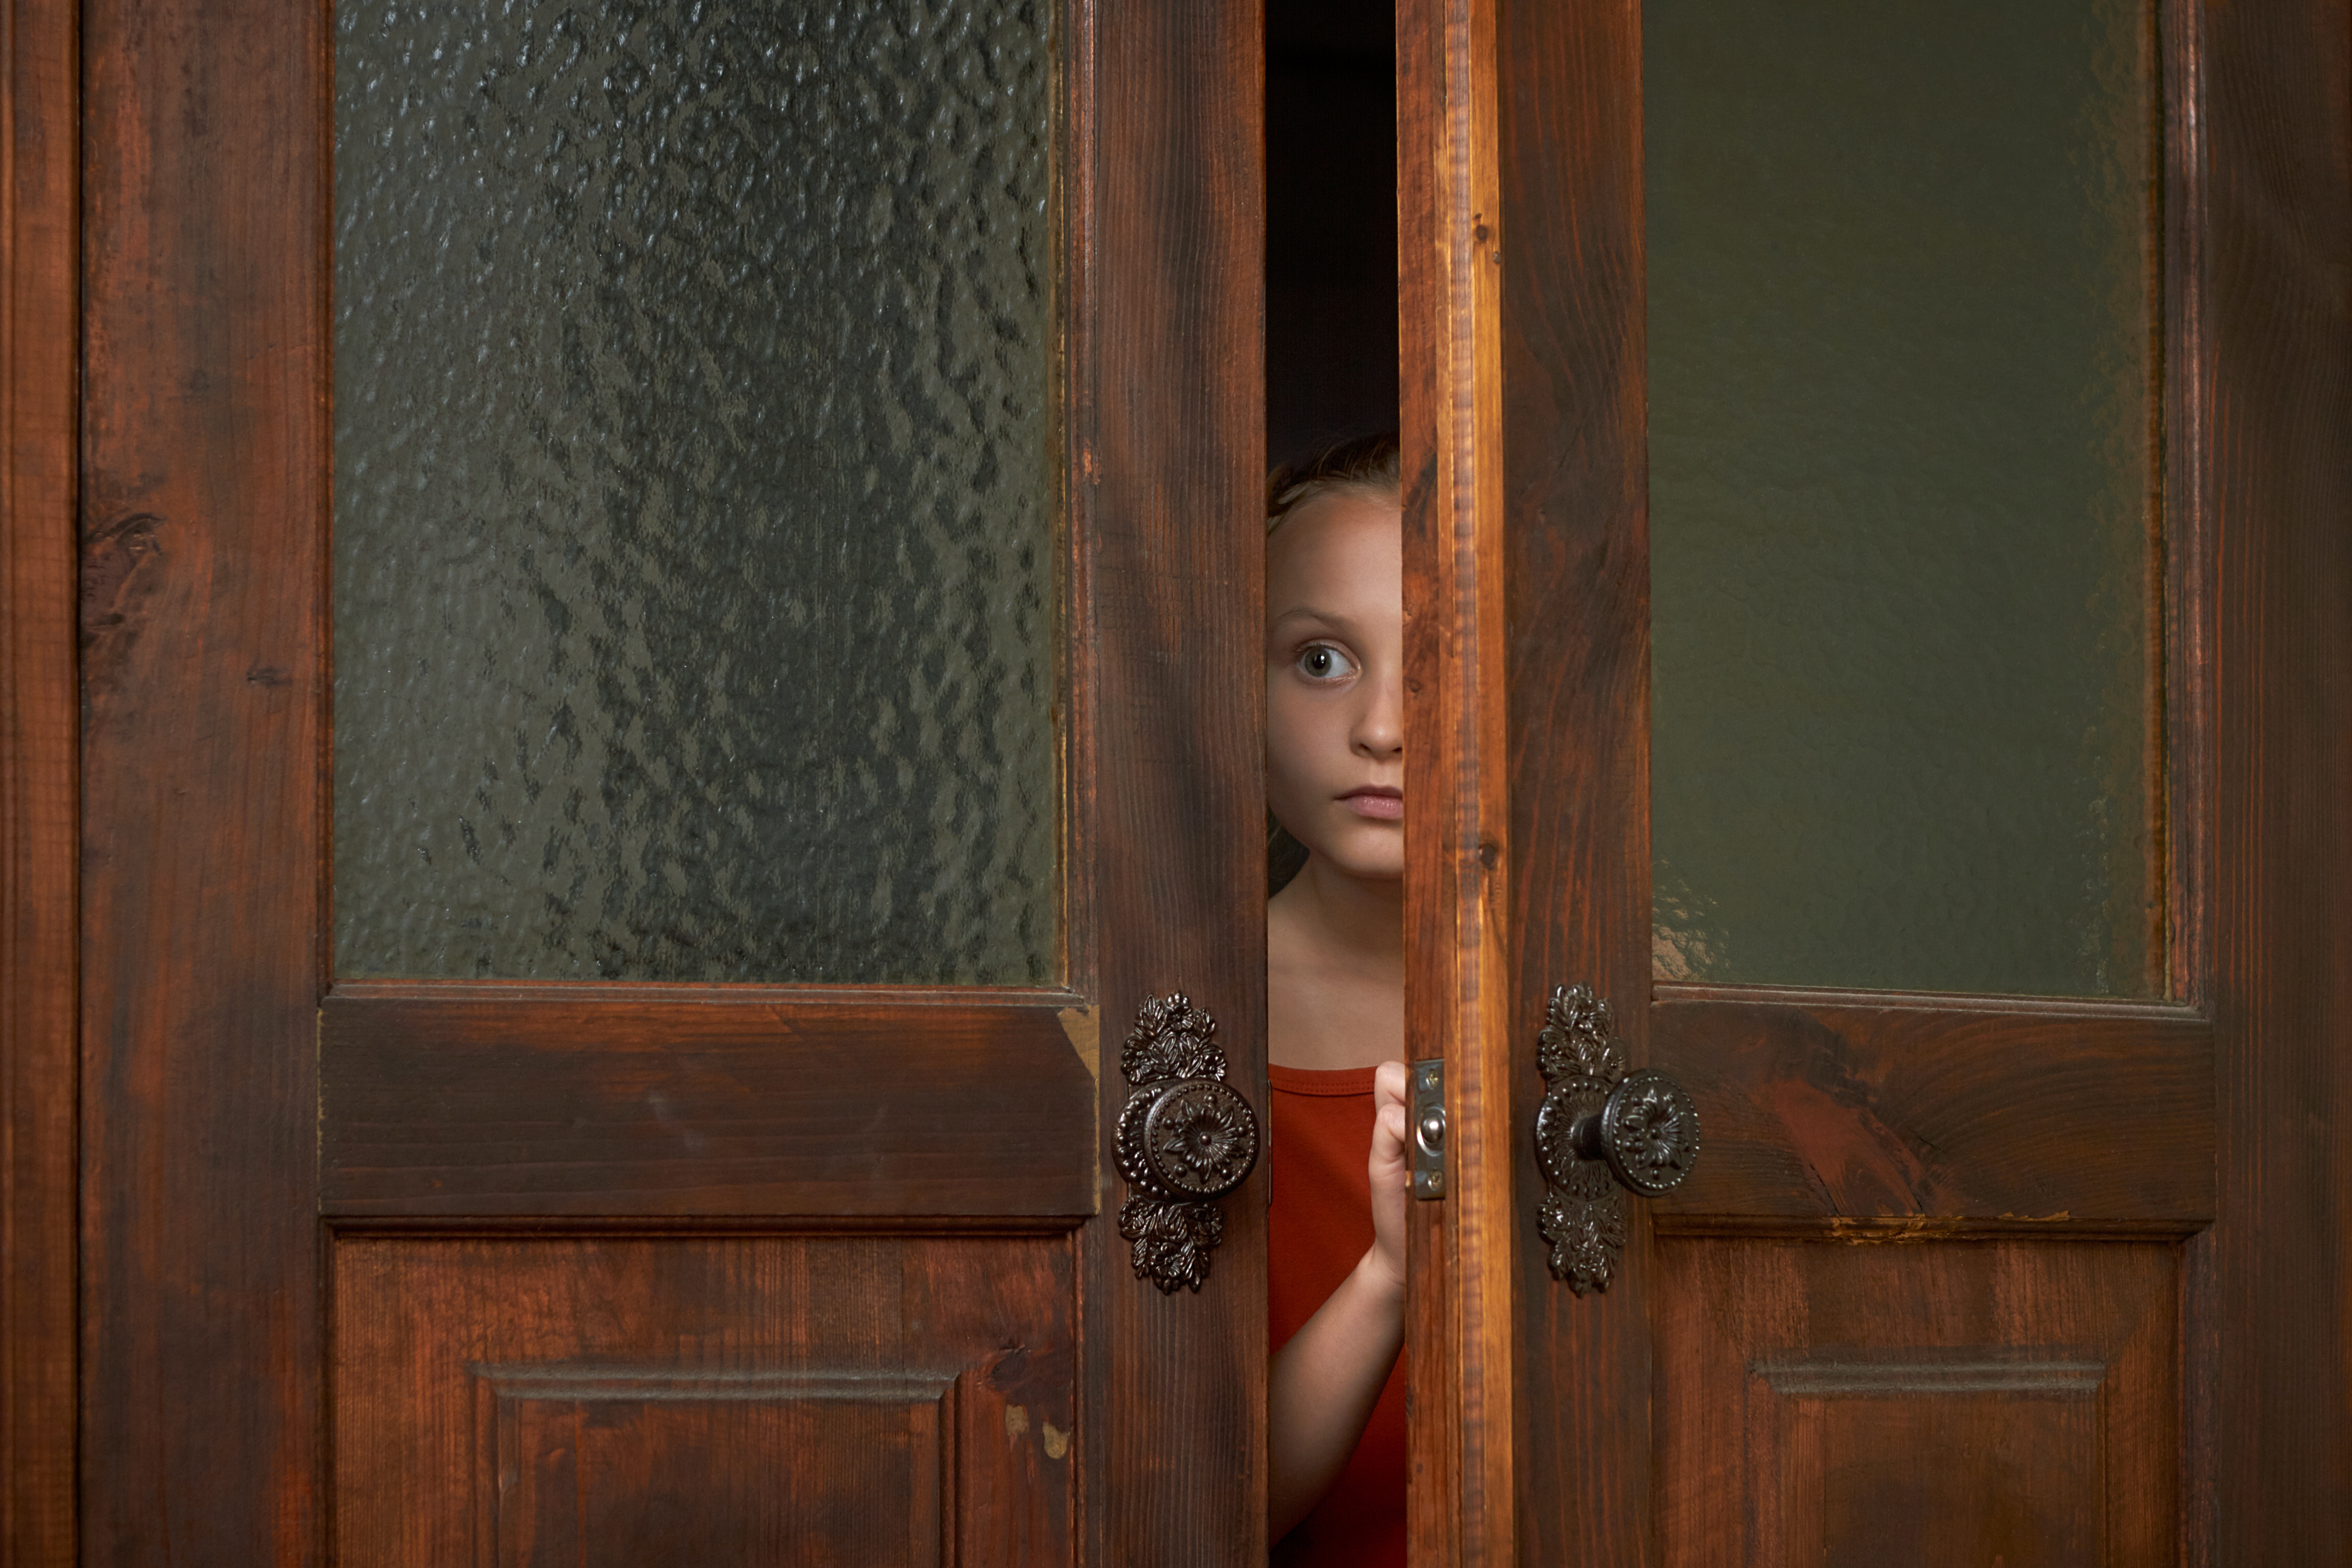 A little scared girl looking through the door slit | Source: Shutterstock